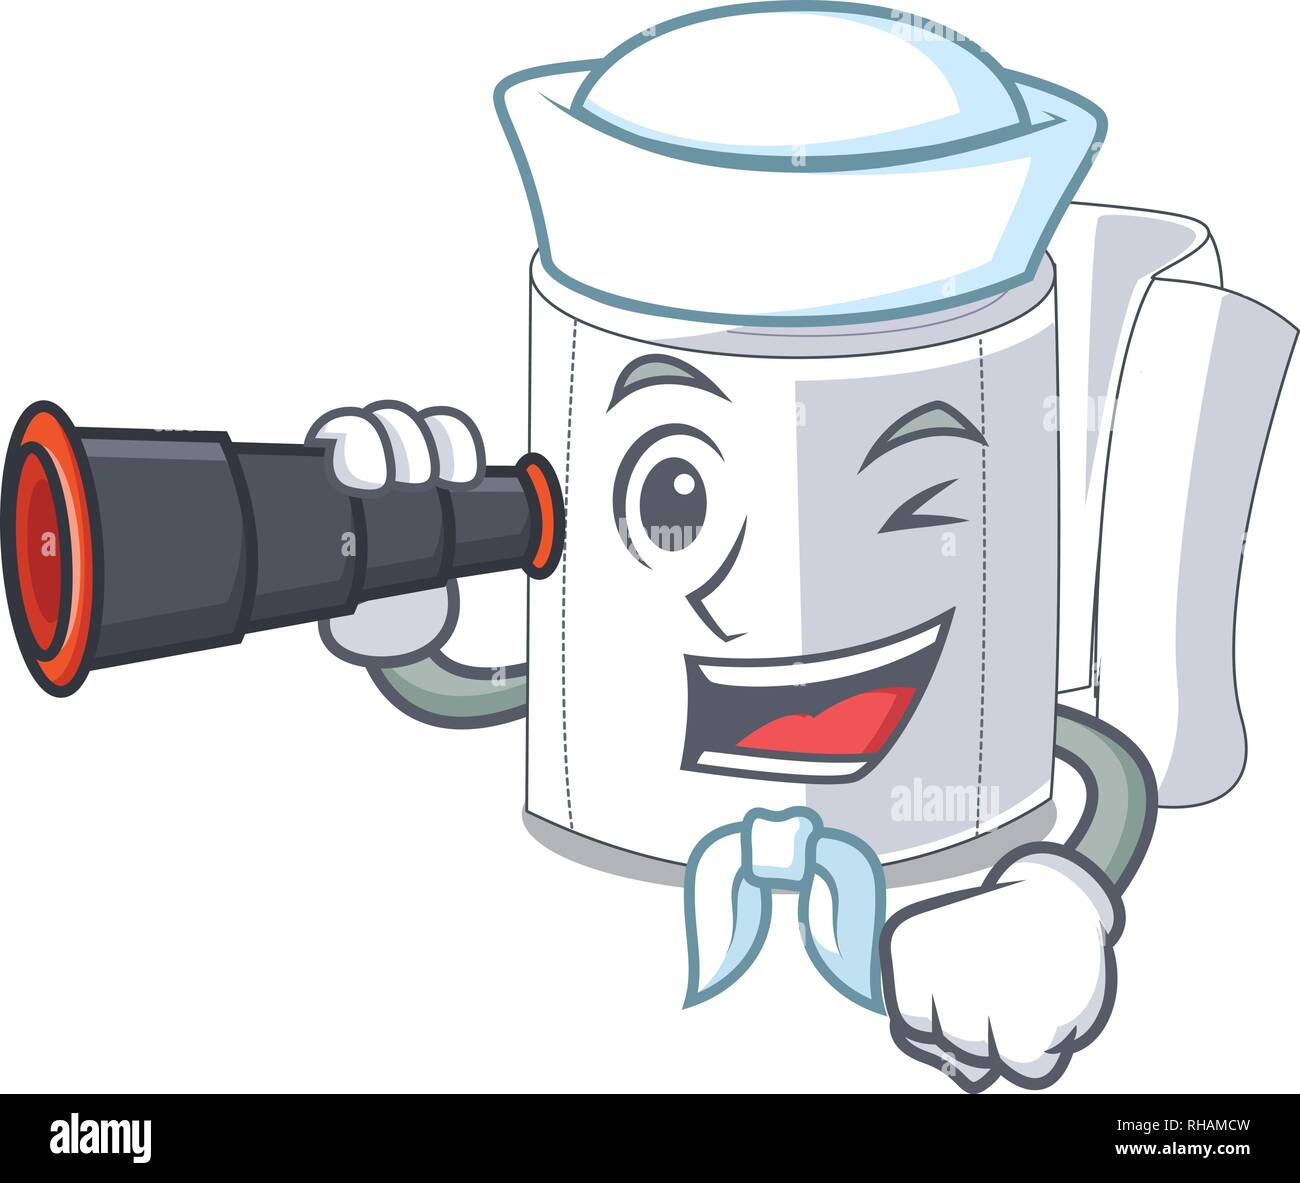 Sailor with binocular toilet paper in shape of mascot Stock Vector